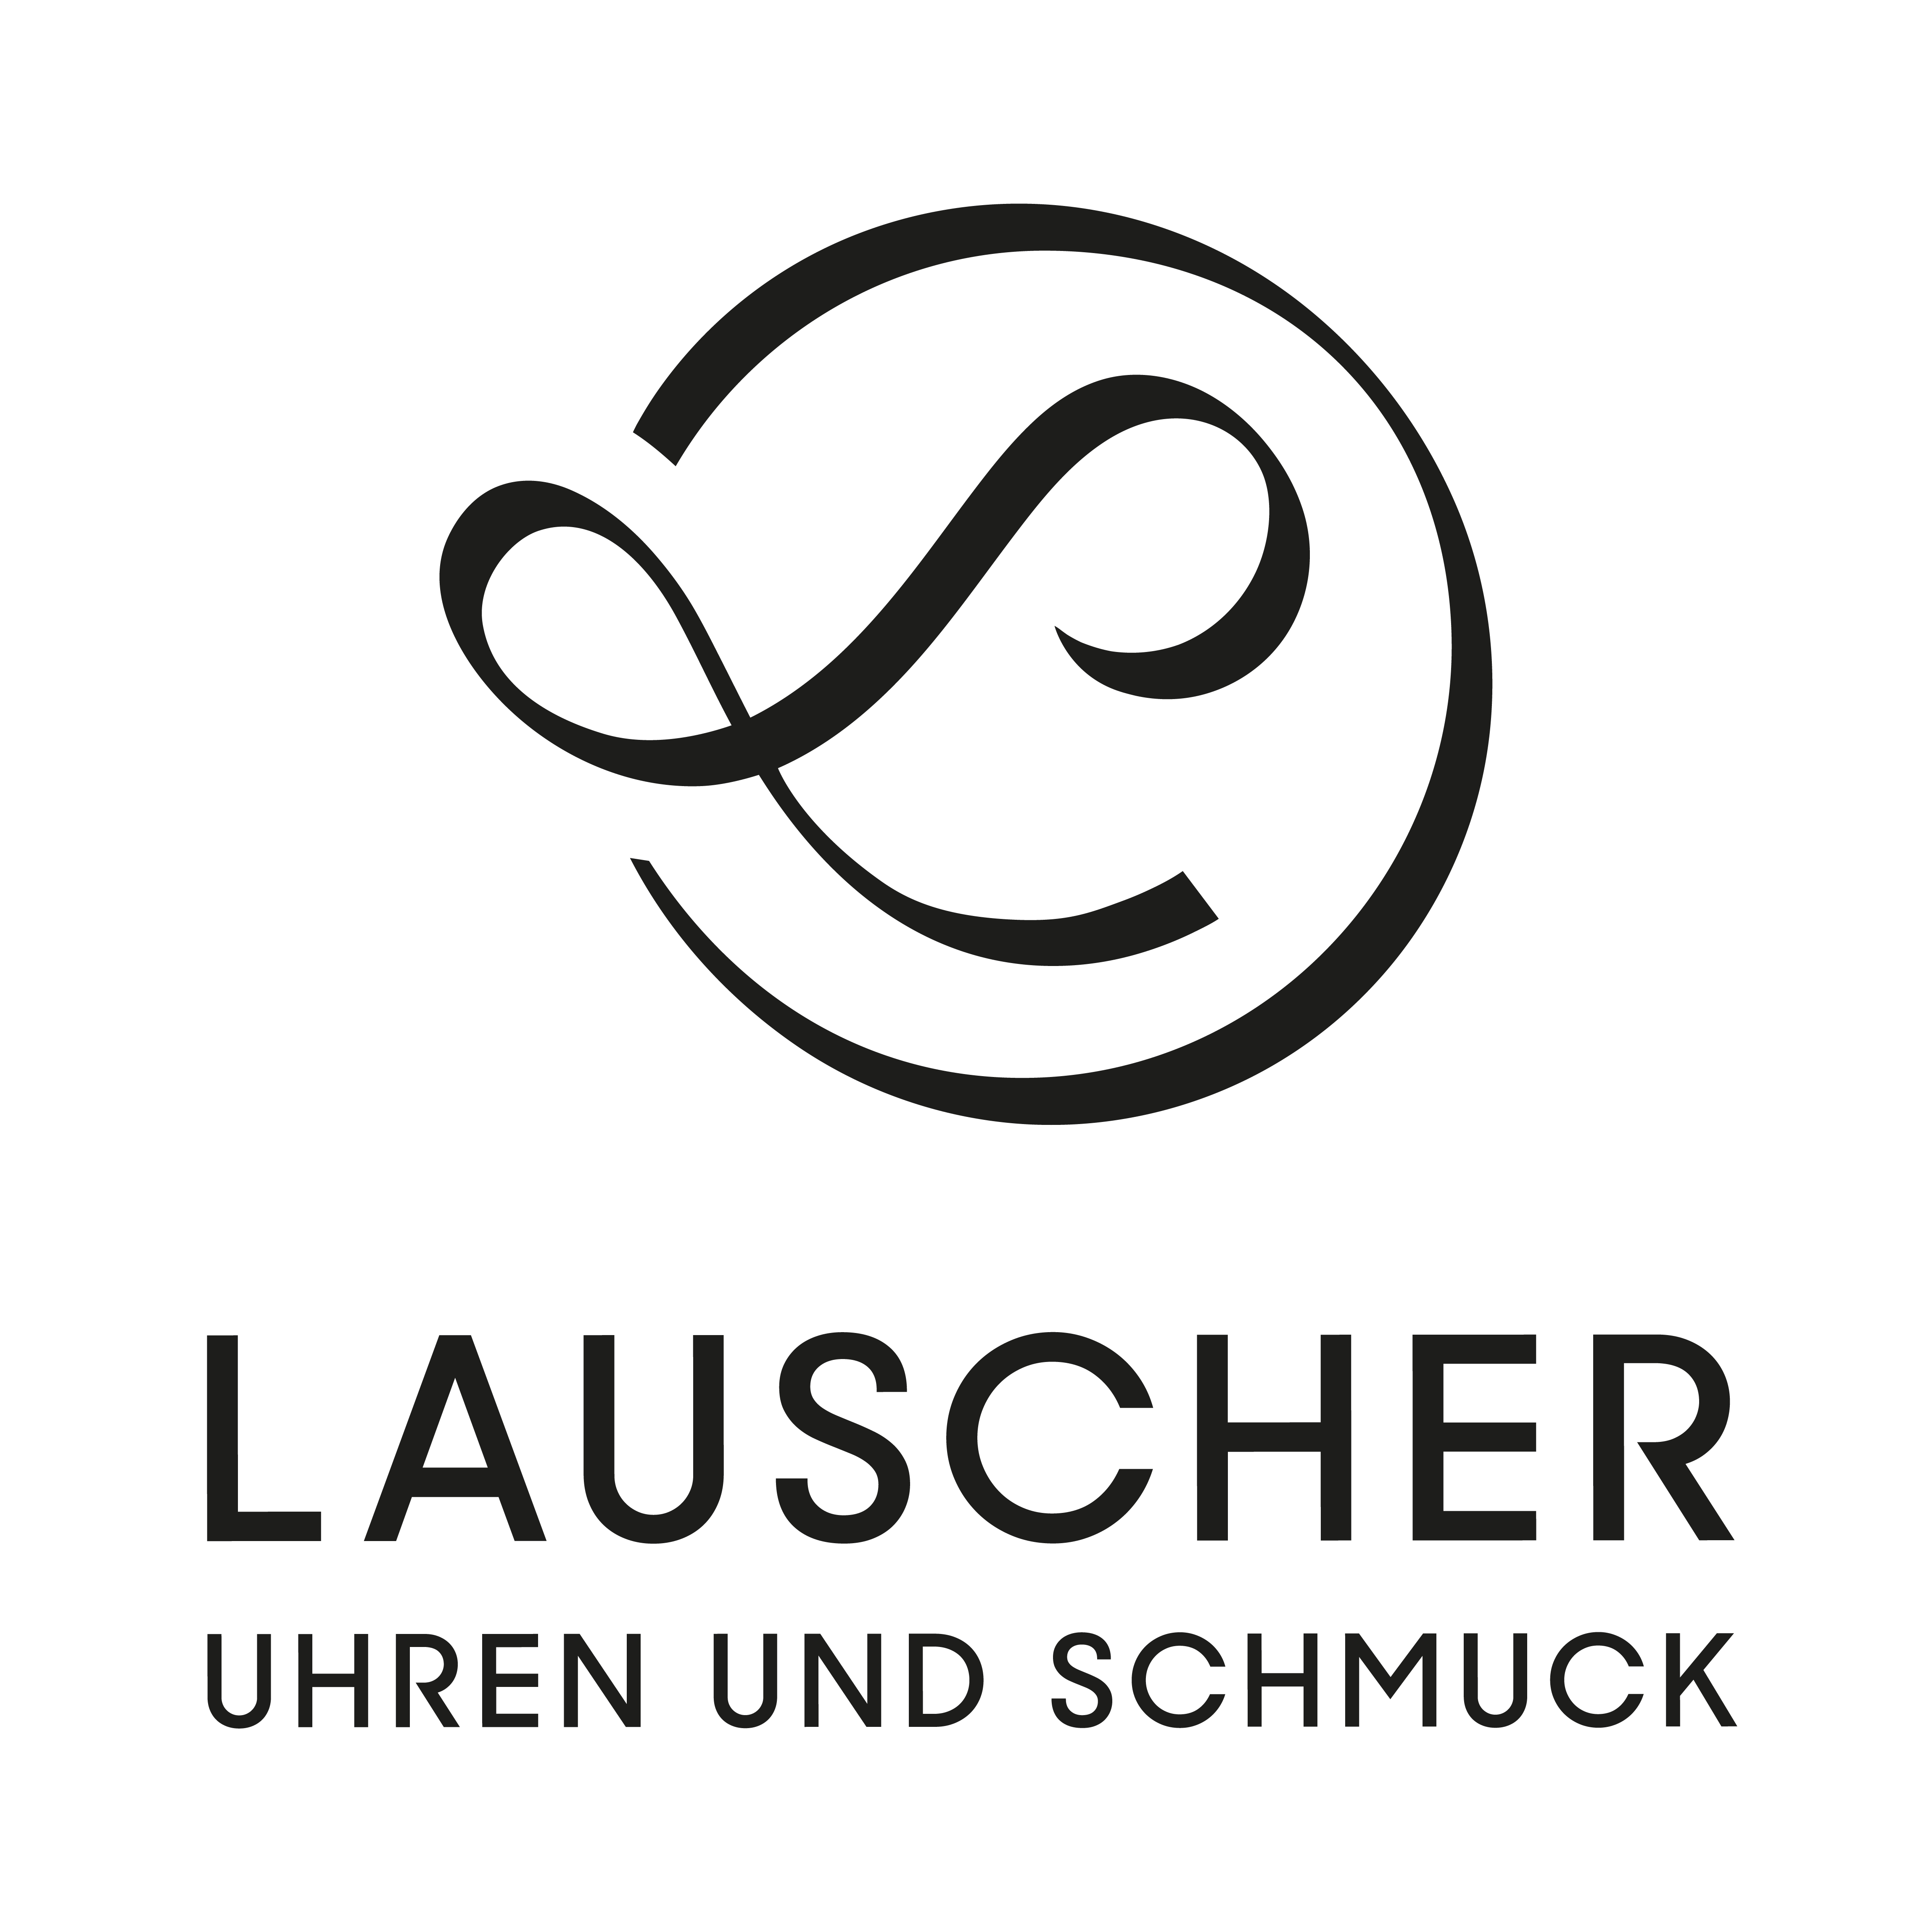 LAUSCHER - Uhren & Schmuck